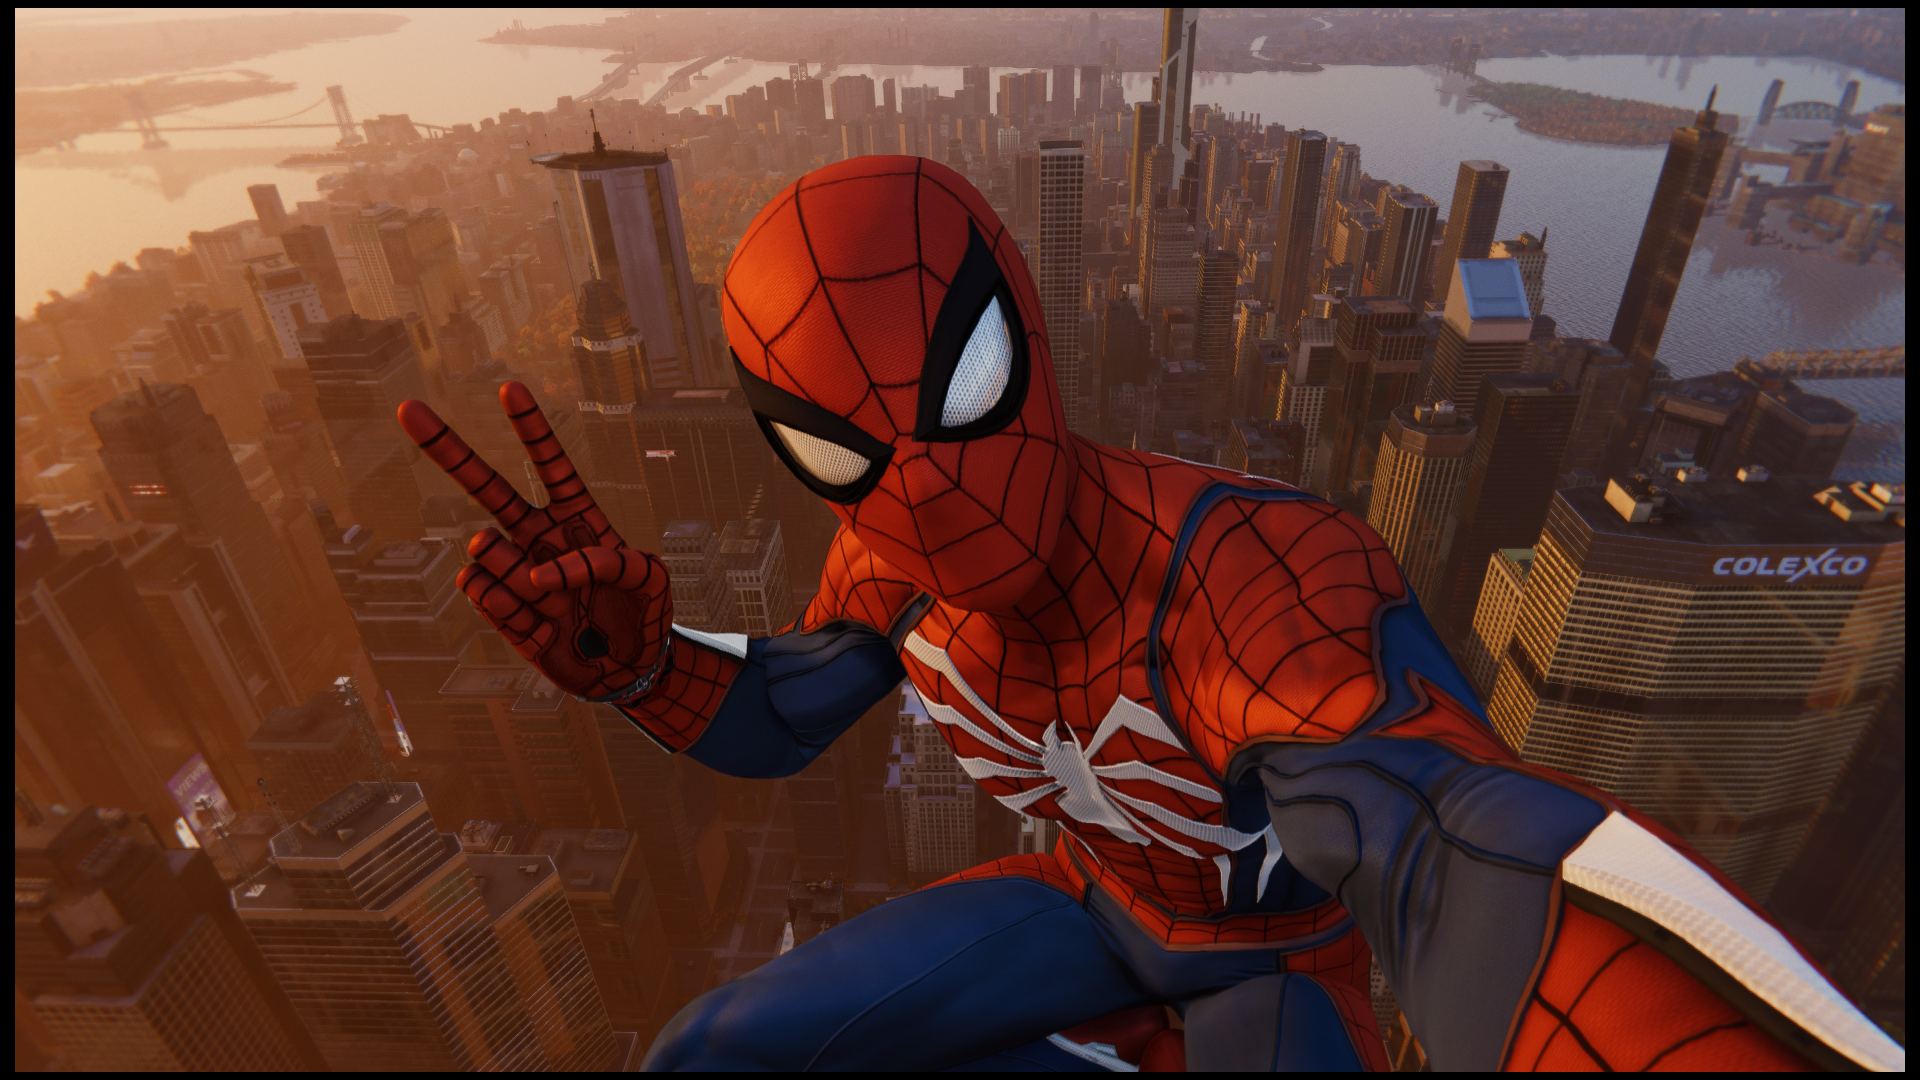 Marvel S Spider Man をもっと楽しむための映像作品5選 年末年始特集 Game Spark 国内 海外ゲーム情報サイト